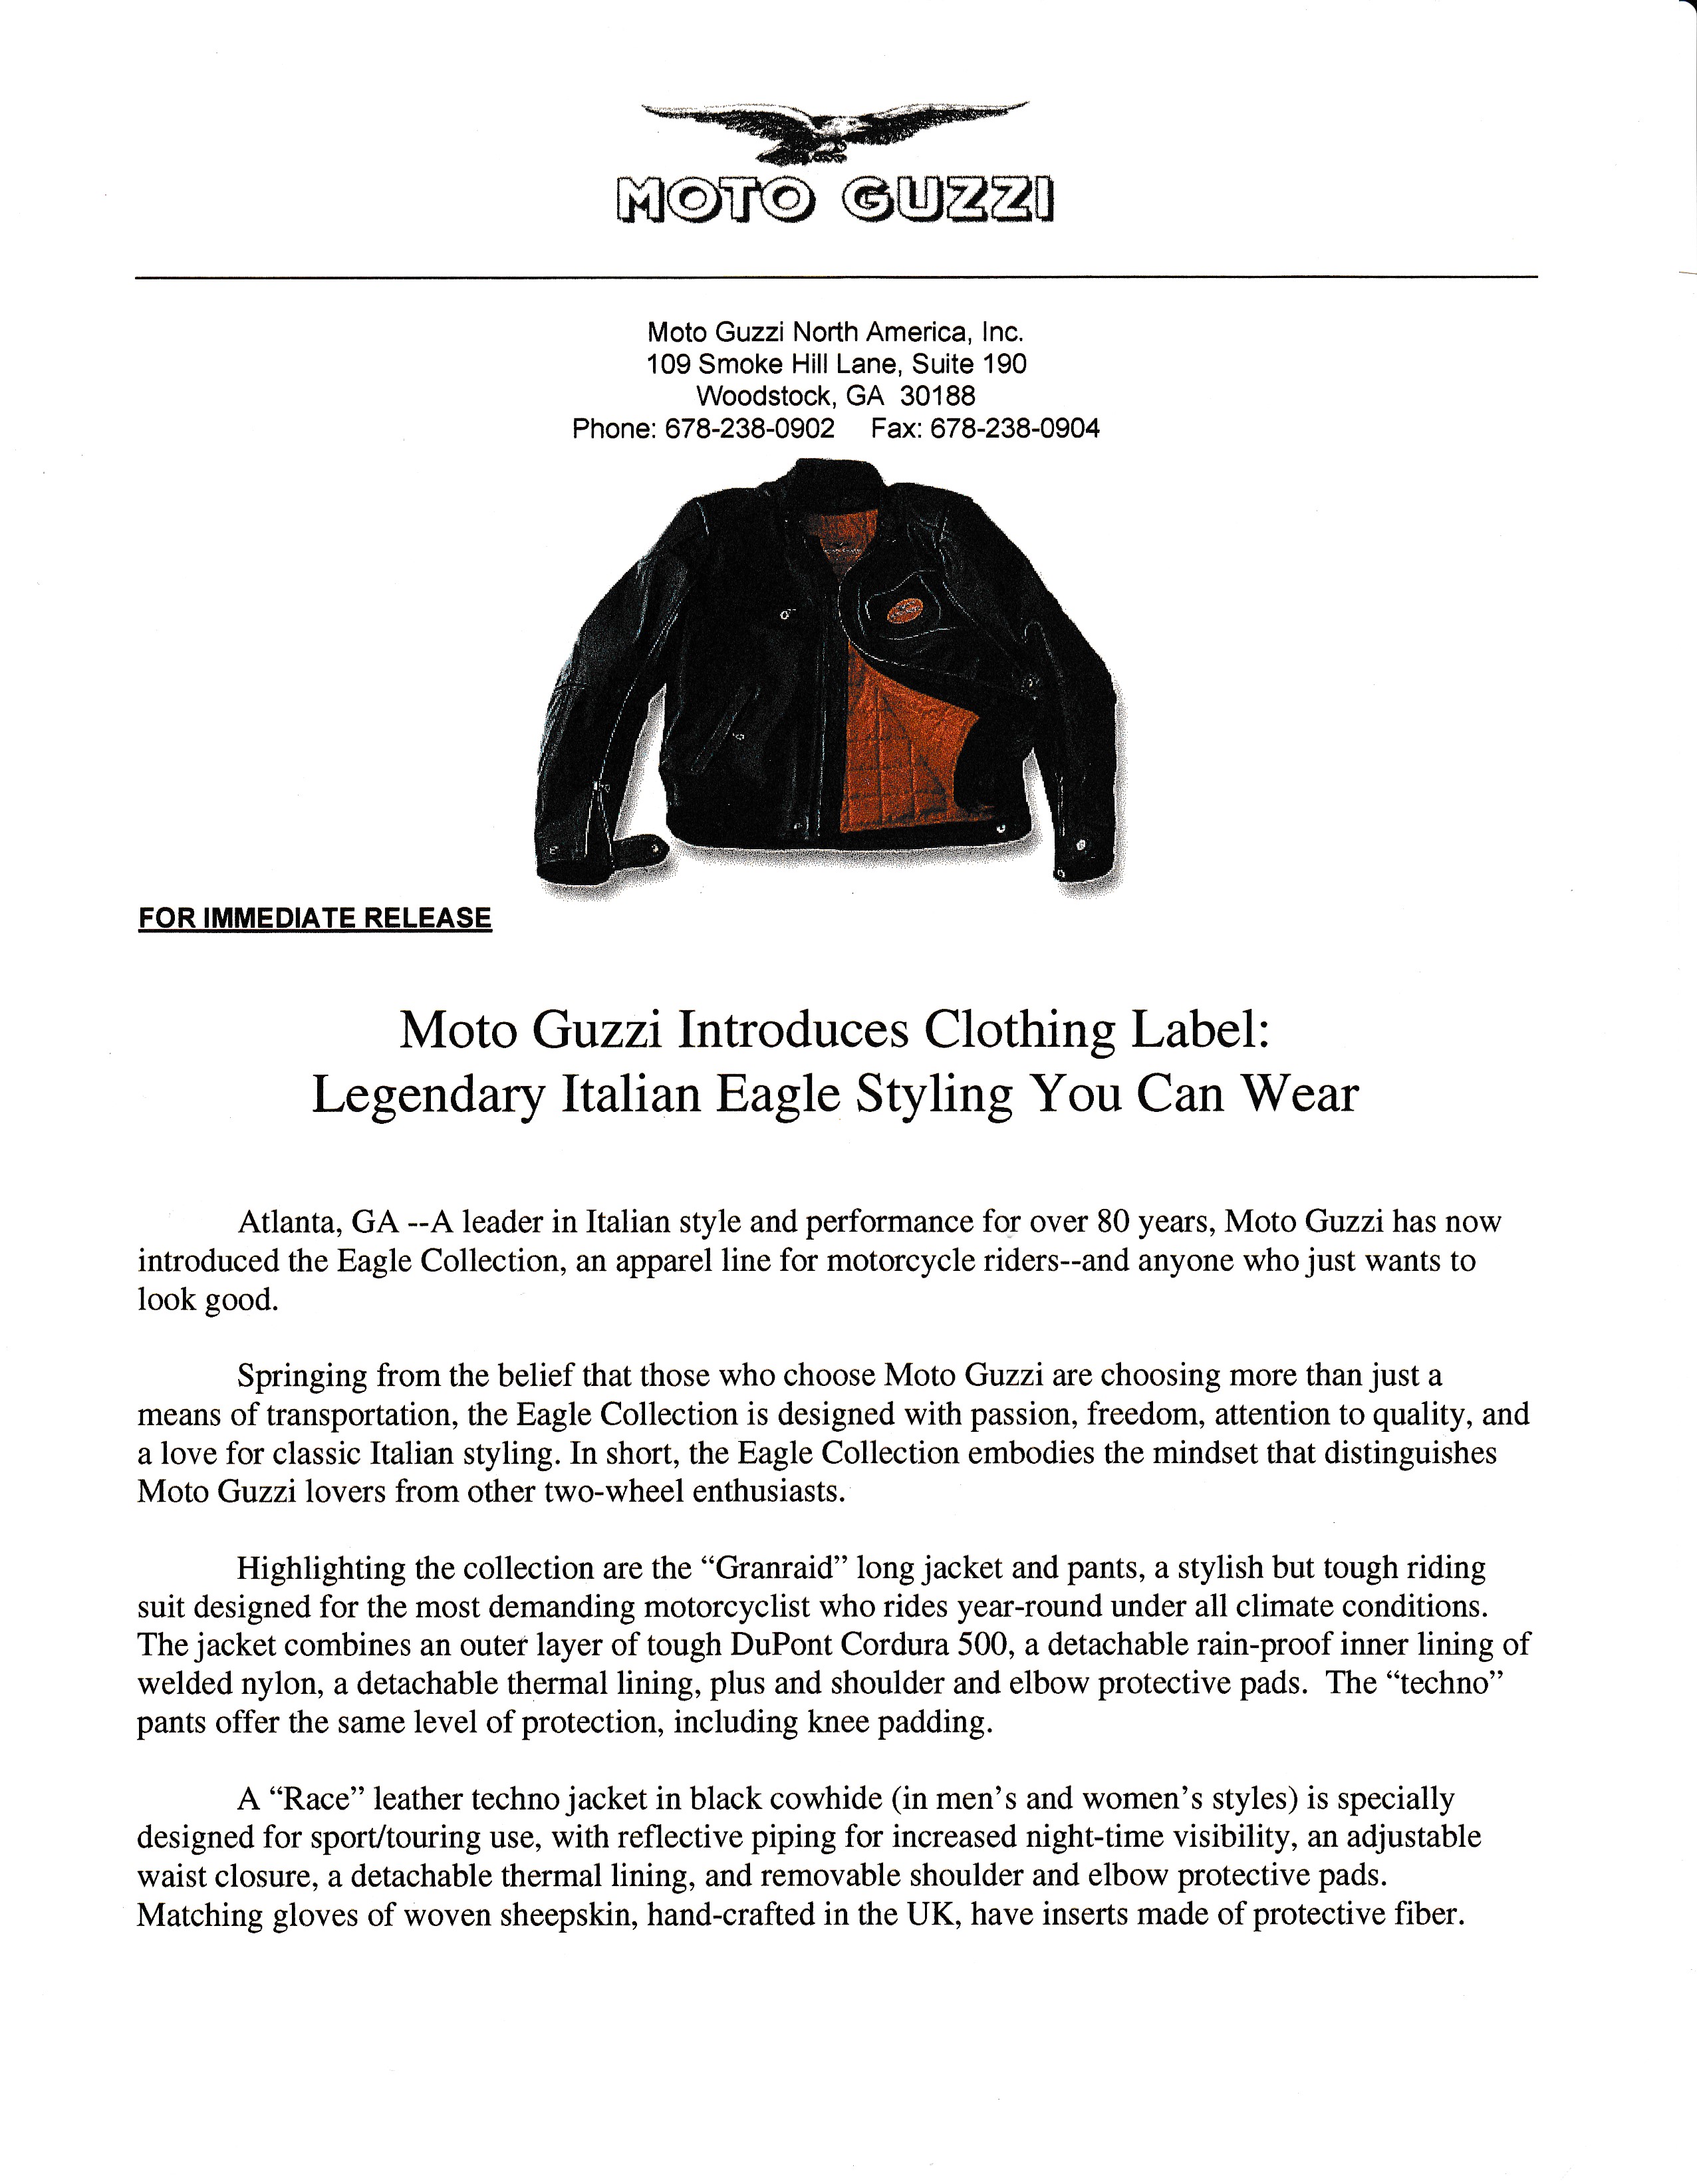 Press release - Eagle Collection apparel